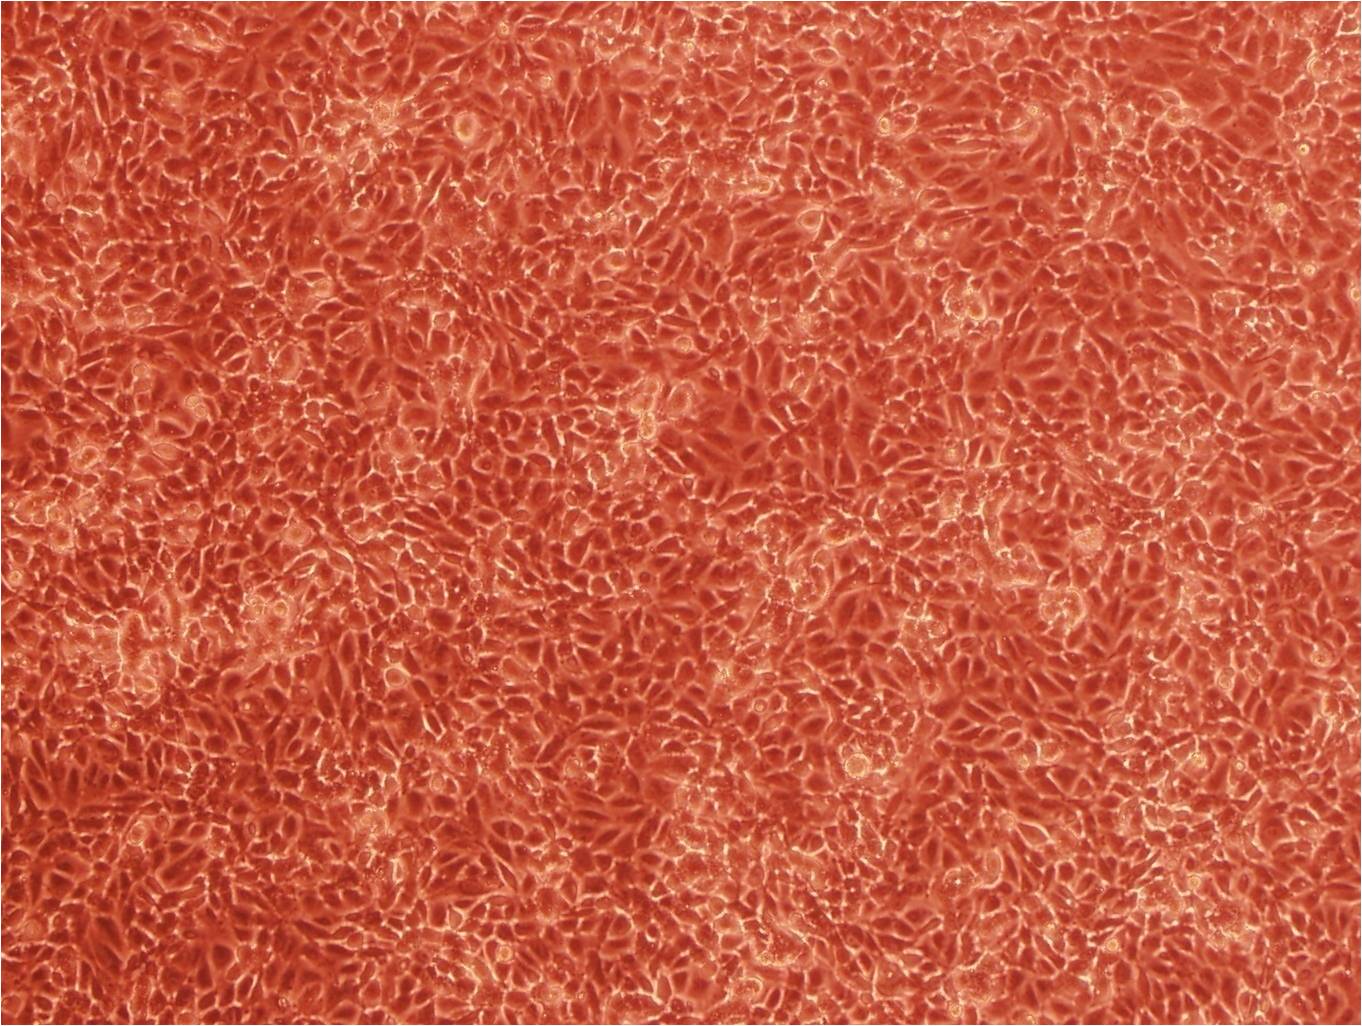 GL261 Cell|小鼠胶质瘤细胞,GL261 Cell